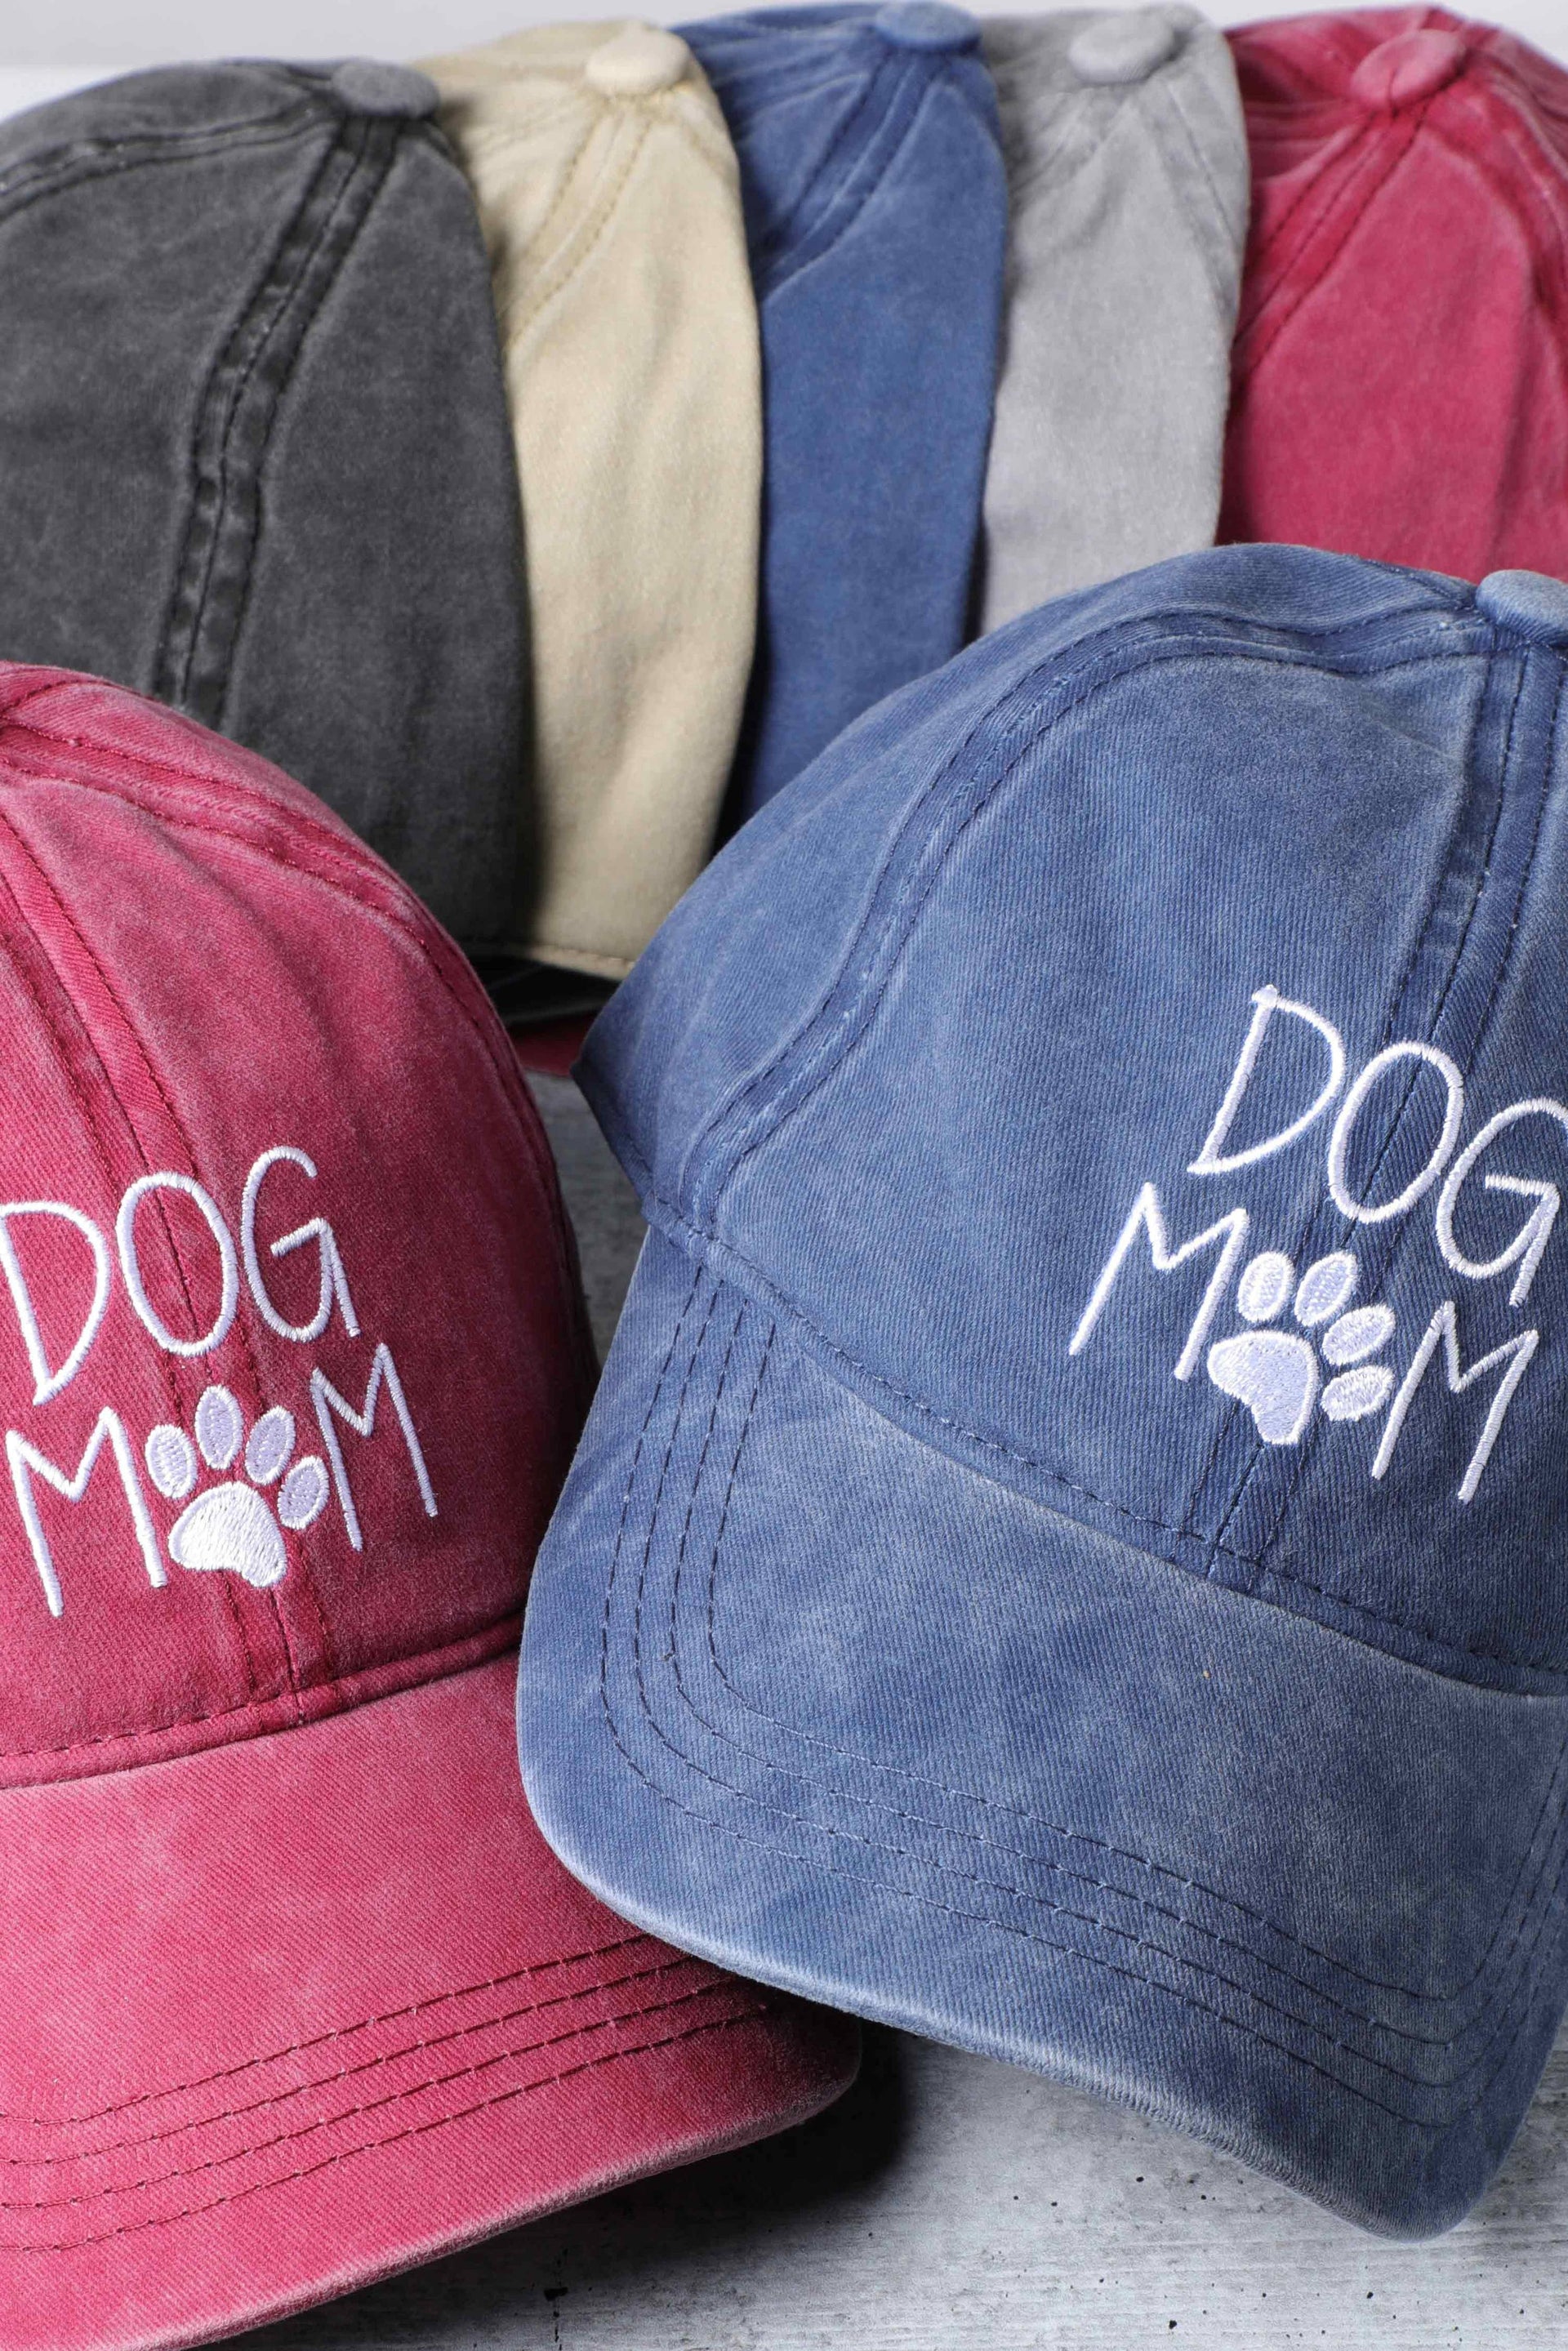 DOG MOM Embroidered Cotton Baseball Caps